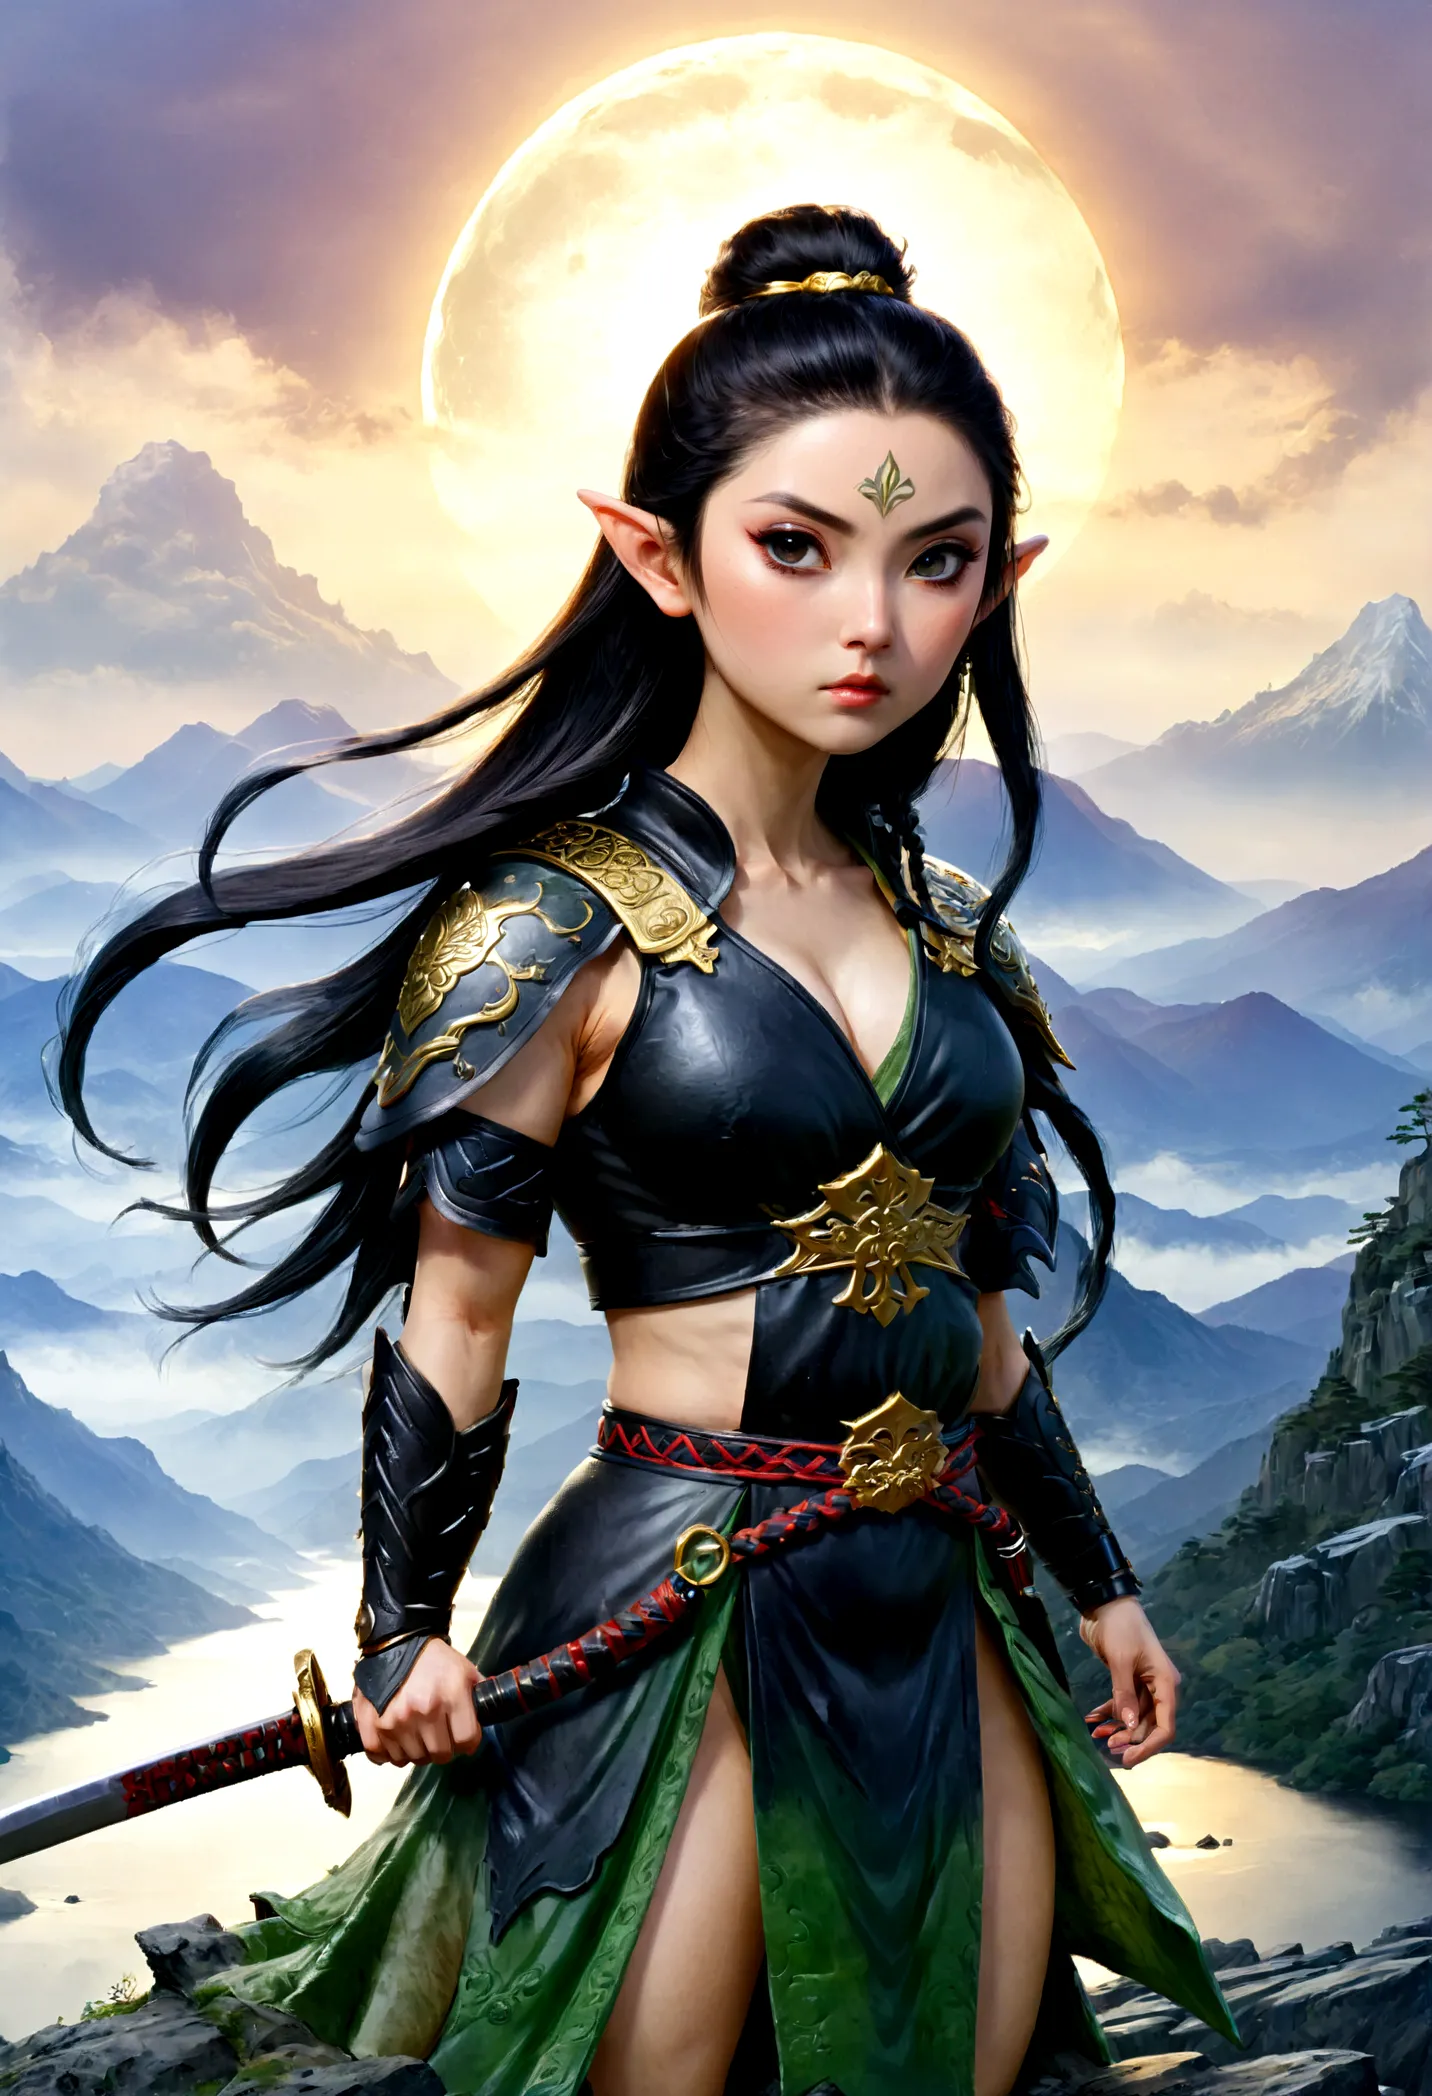 ((water color art: 1.5)), fantasy art, RPG art, dark fantasy art, a female elf samurai, ready to battle, she wears traditional s...